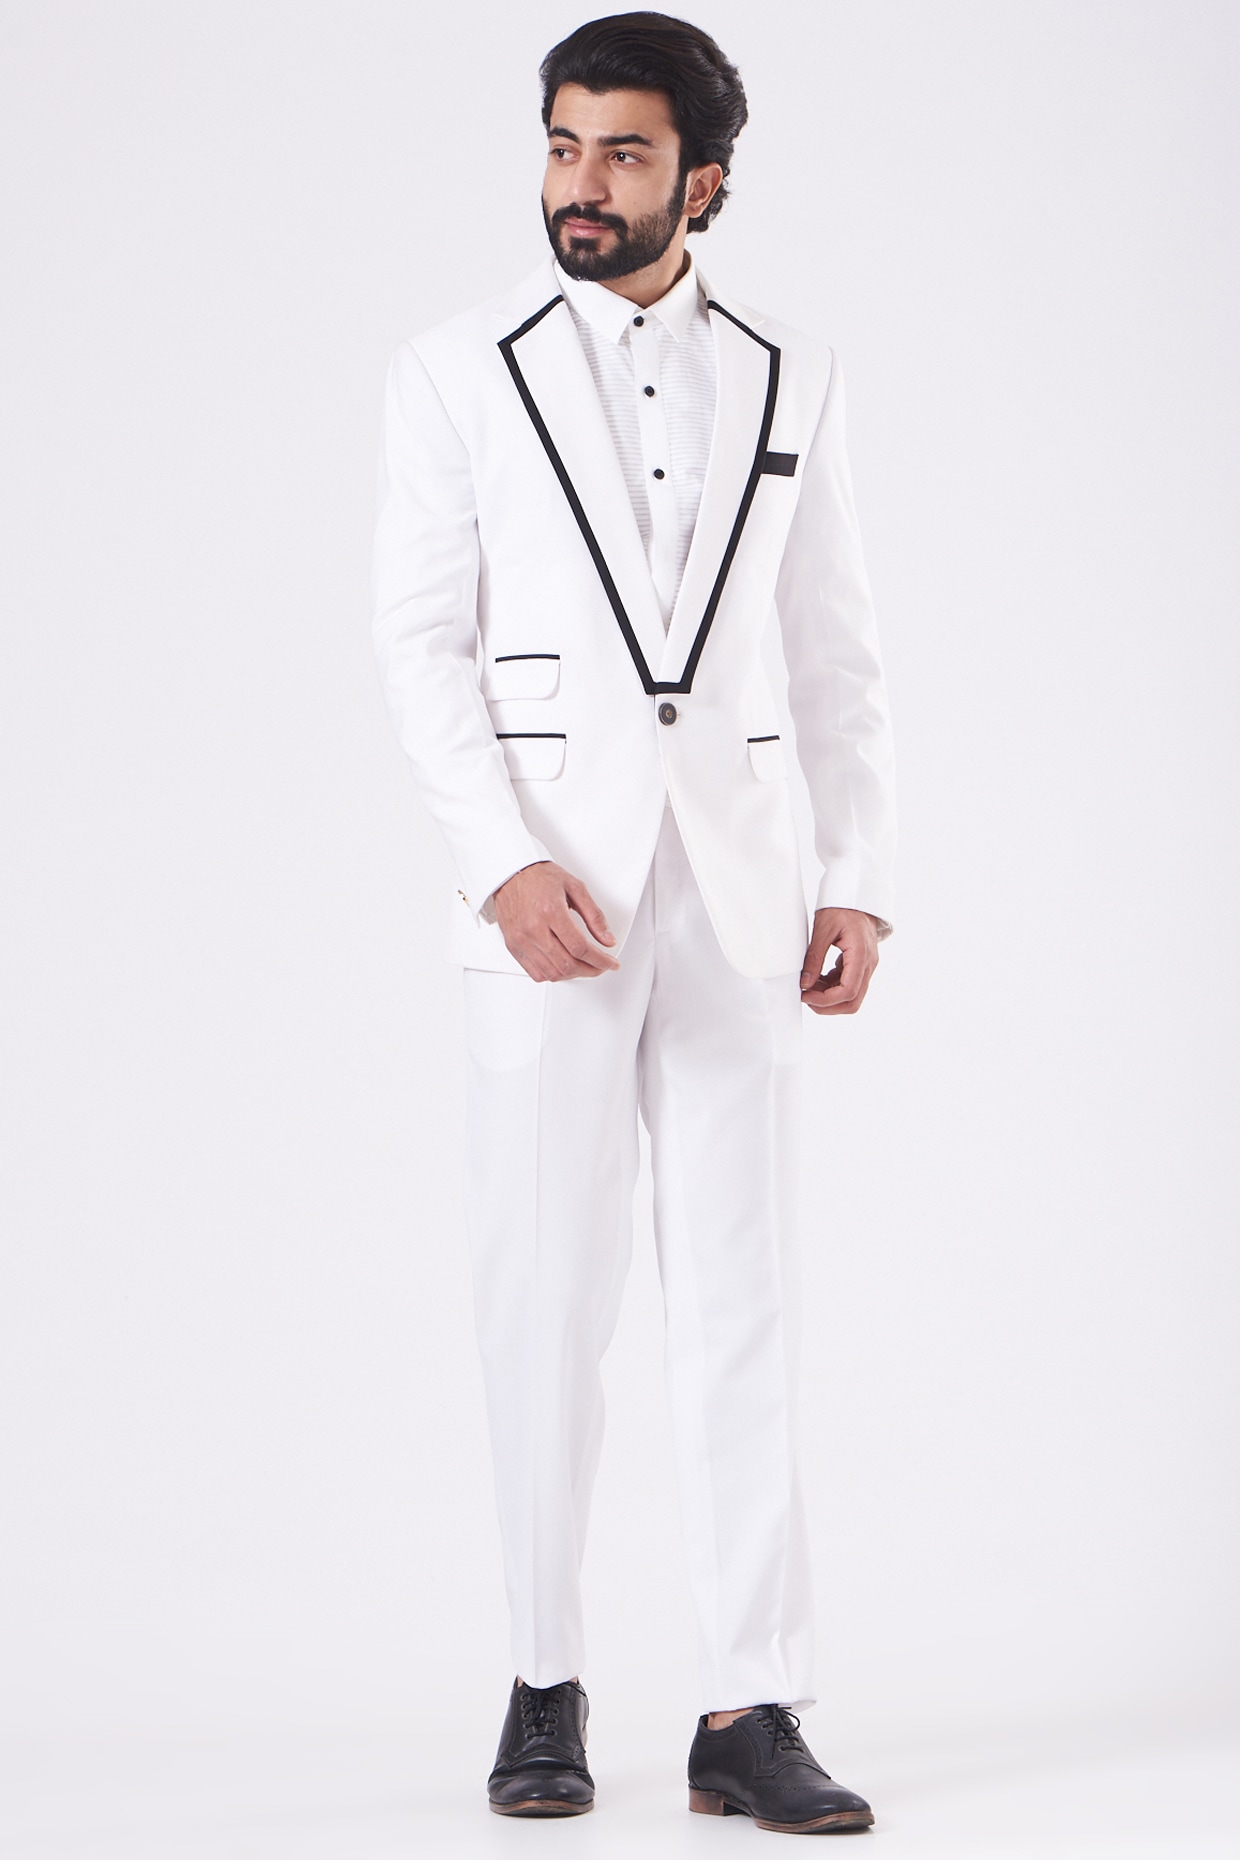 BABA G Fabrics - @gents suit design #gents suit design | Facebook